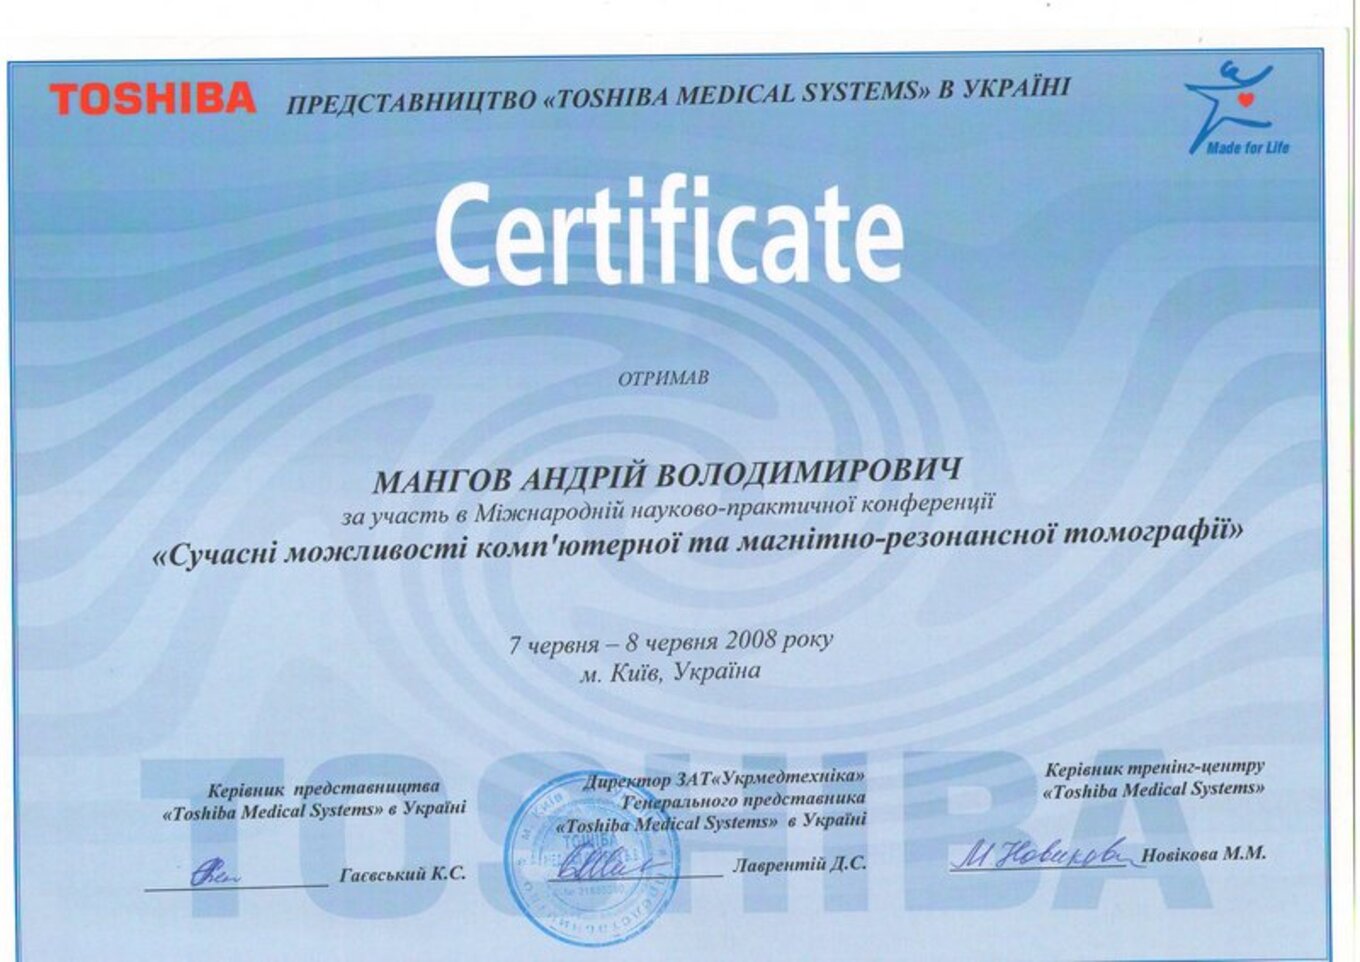 certificates/mangov-andrij-volodimirovich/mangov-certificates-19.jpg